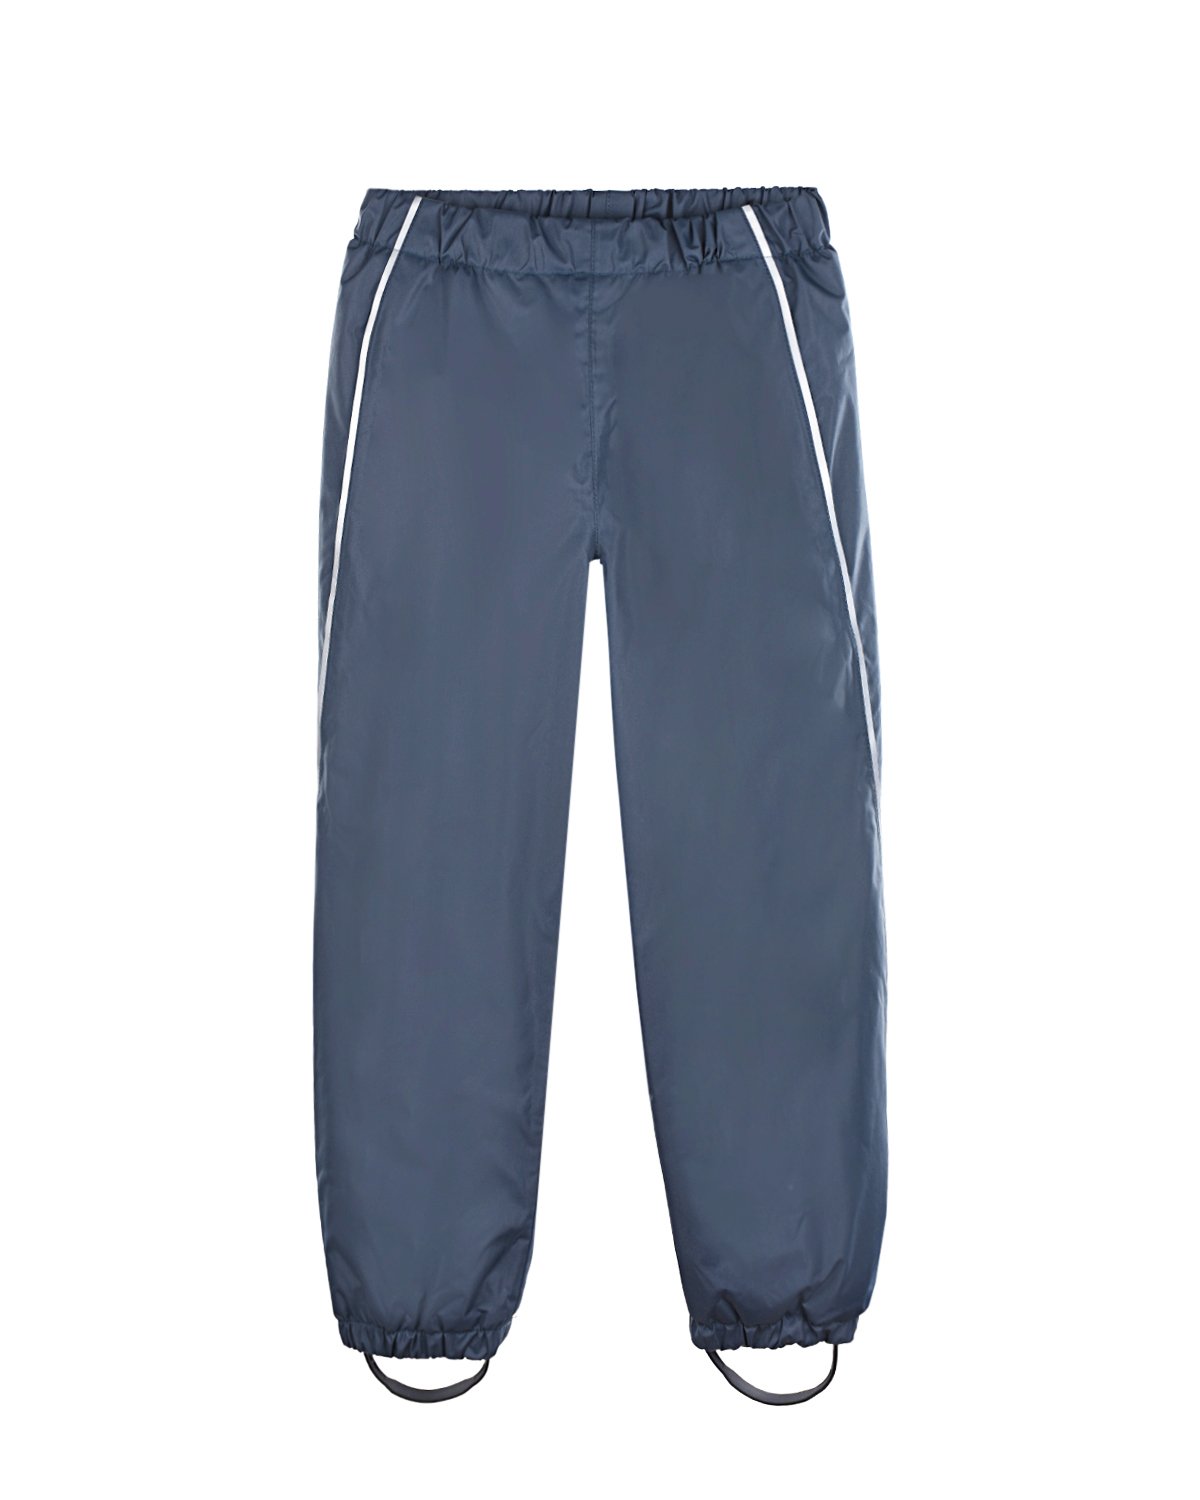 Синие брюки с белыми лампасами Molo детские, размер 110, цвет синий - фото 1